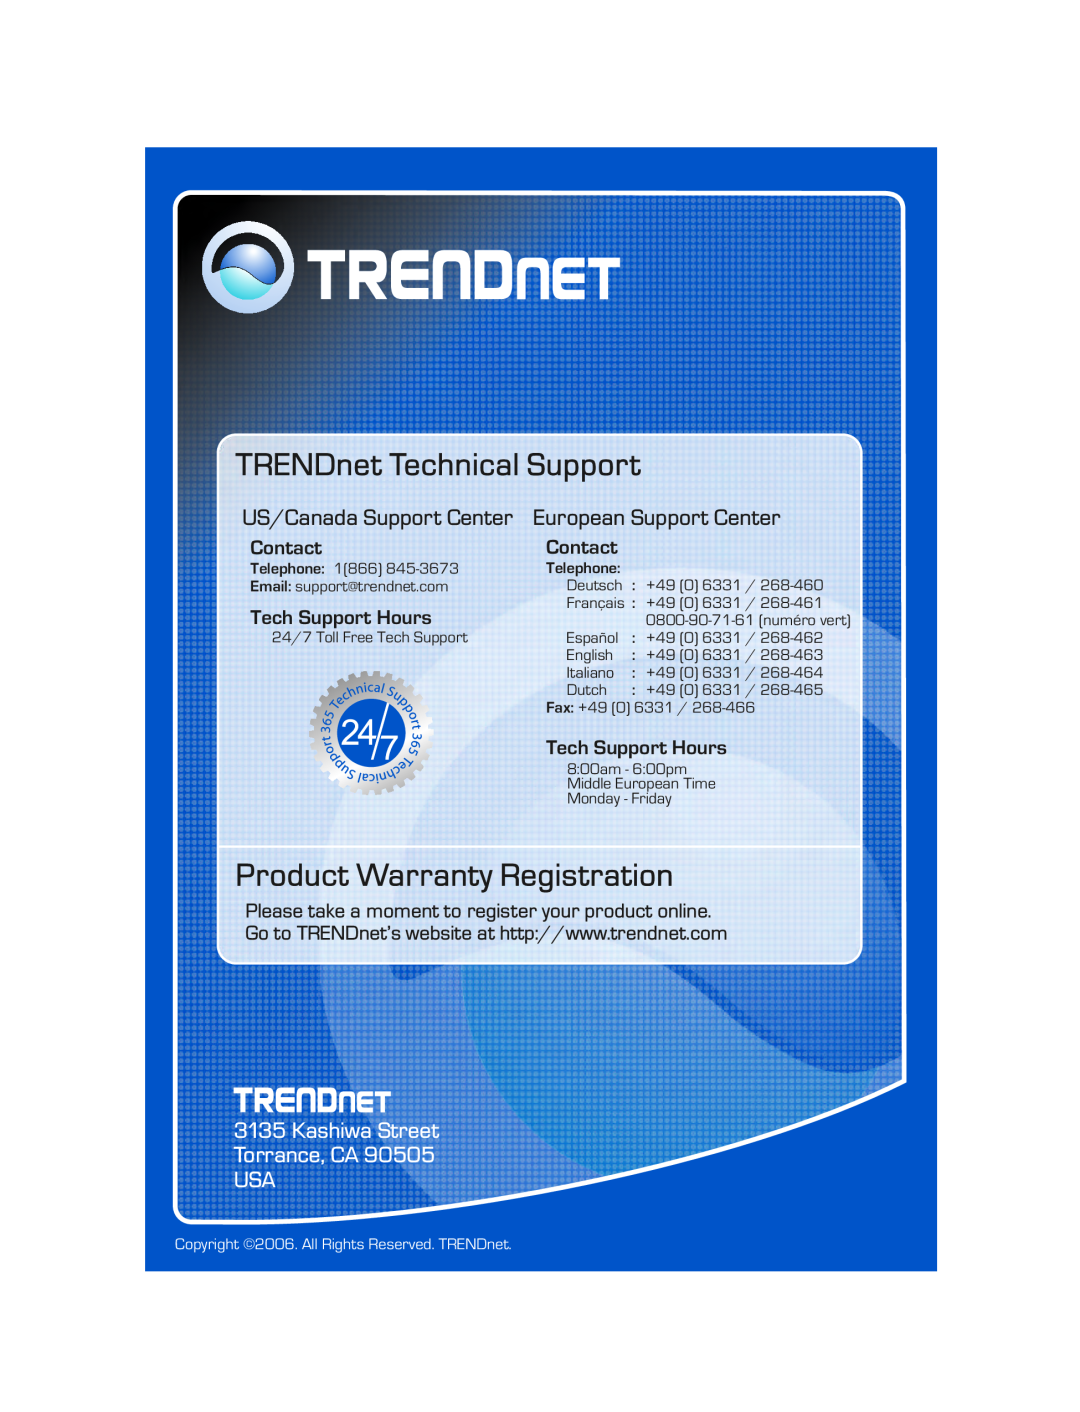 TRENDnet TK-208K manual TRENDnet Technical Support, Product Warranty Registration, Kashiwa Street Torrance, CA USA, Contact 